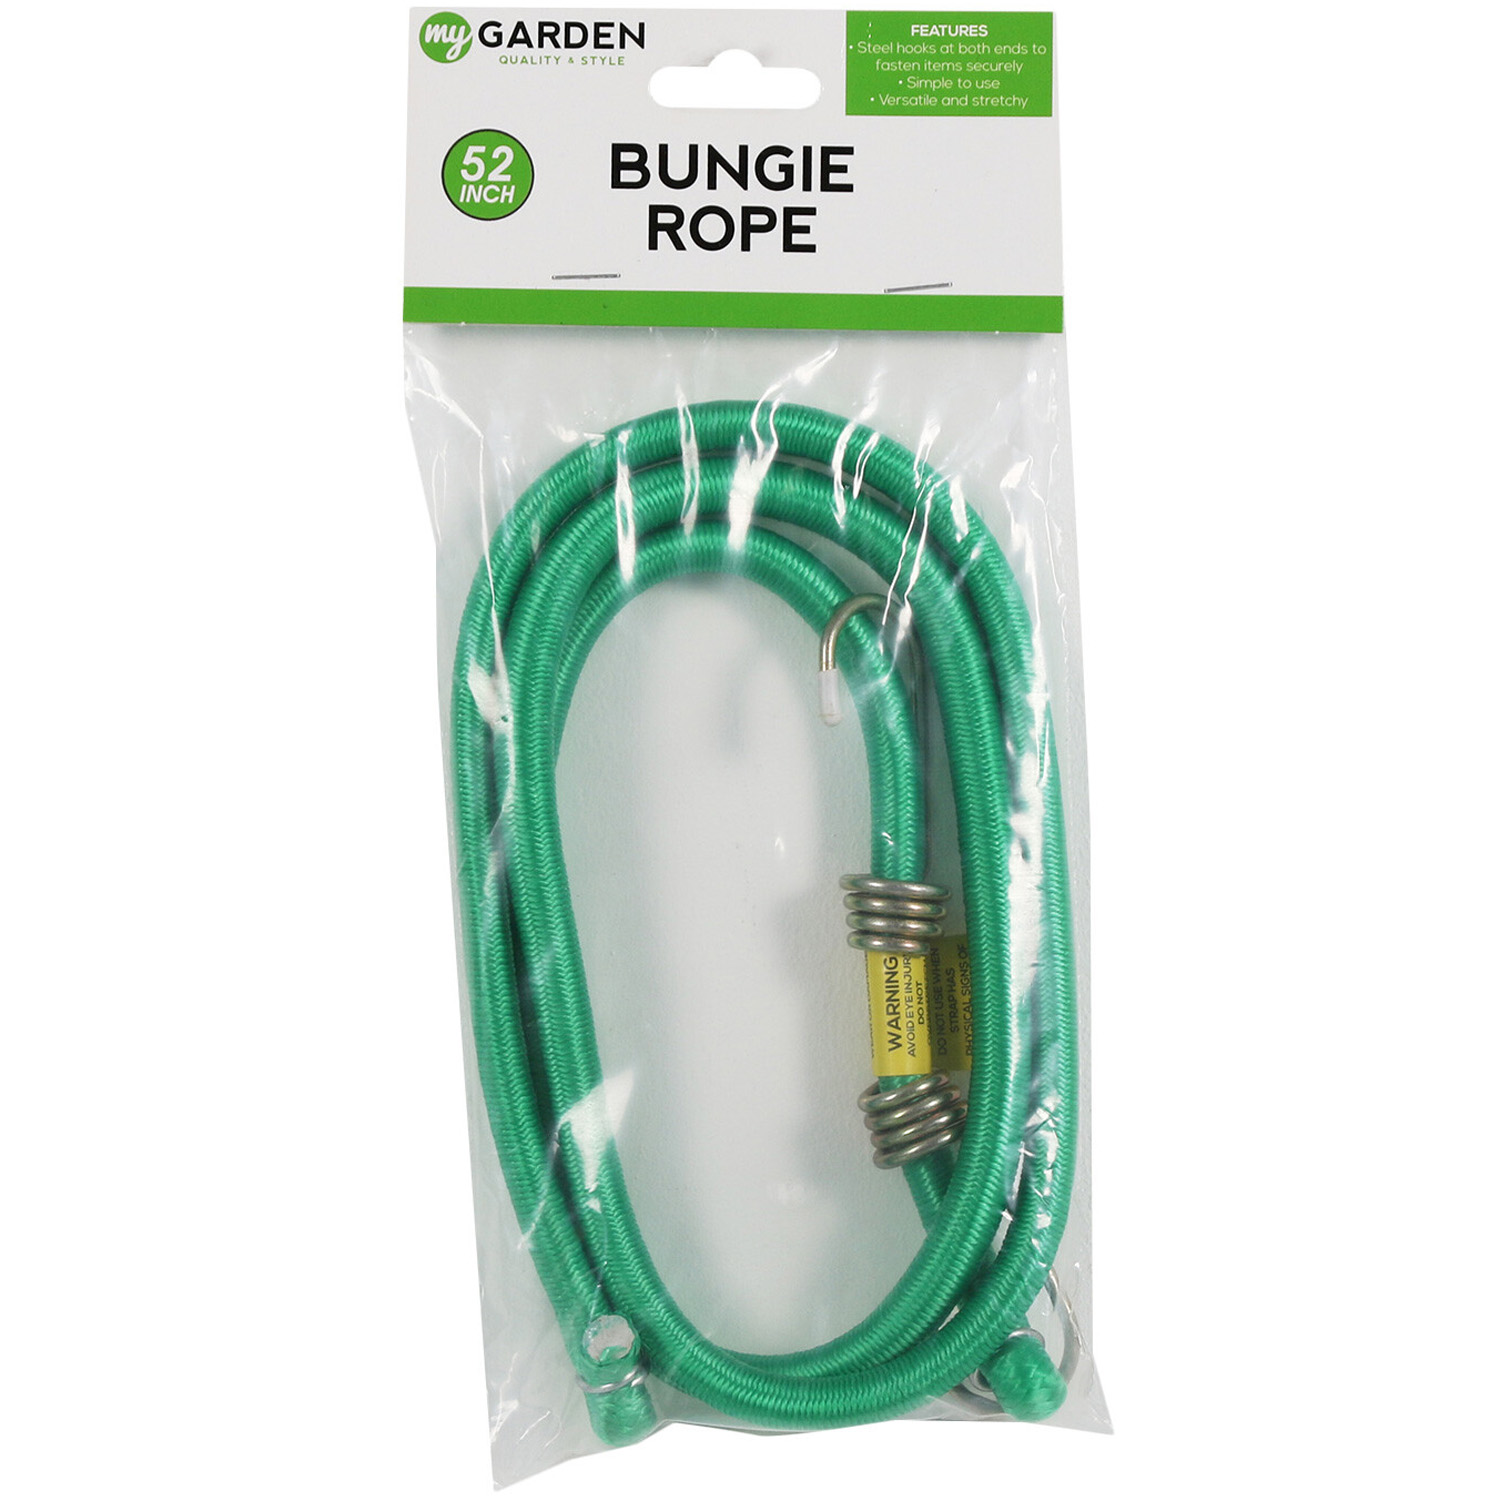 My Garden Bungie Rope 52 inch Image